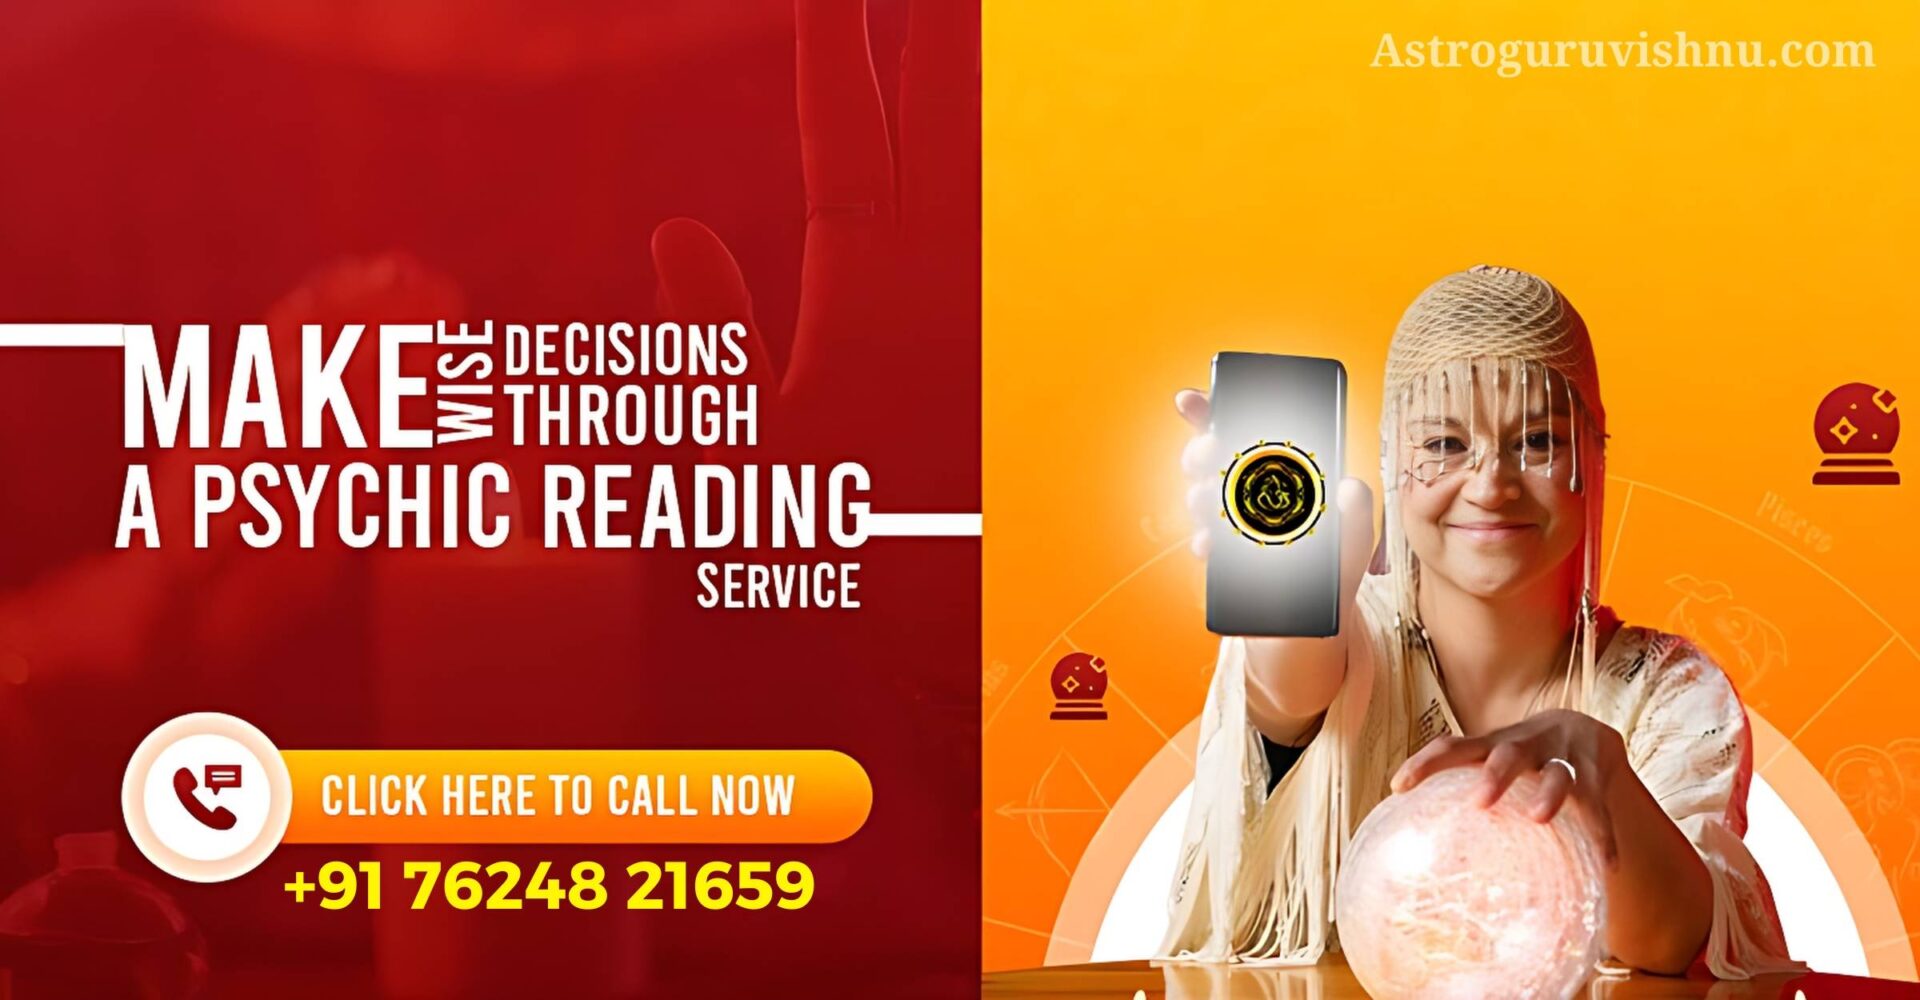 psychic reading astrologer, best astrologer, astro guru vishnu